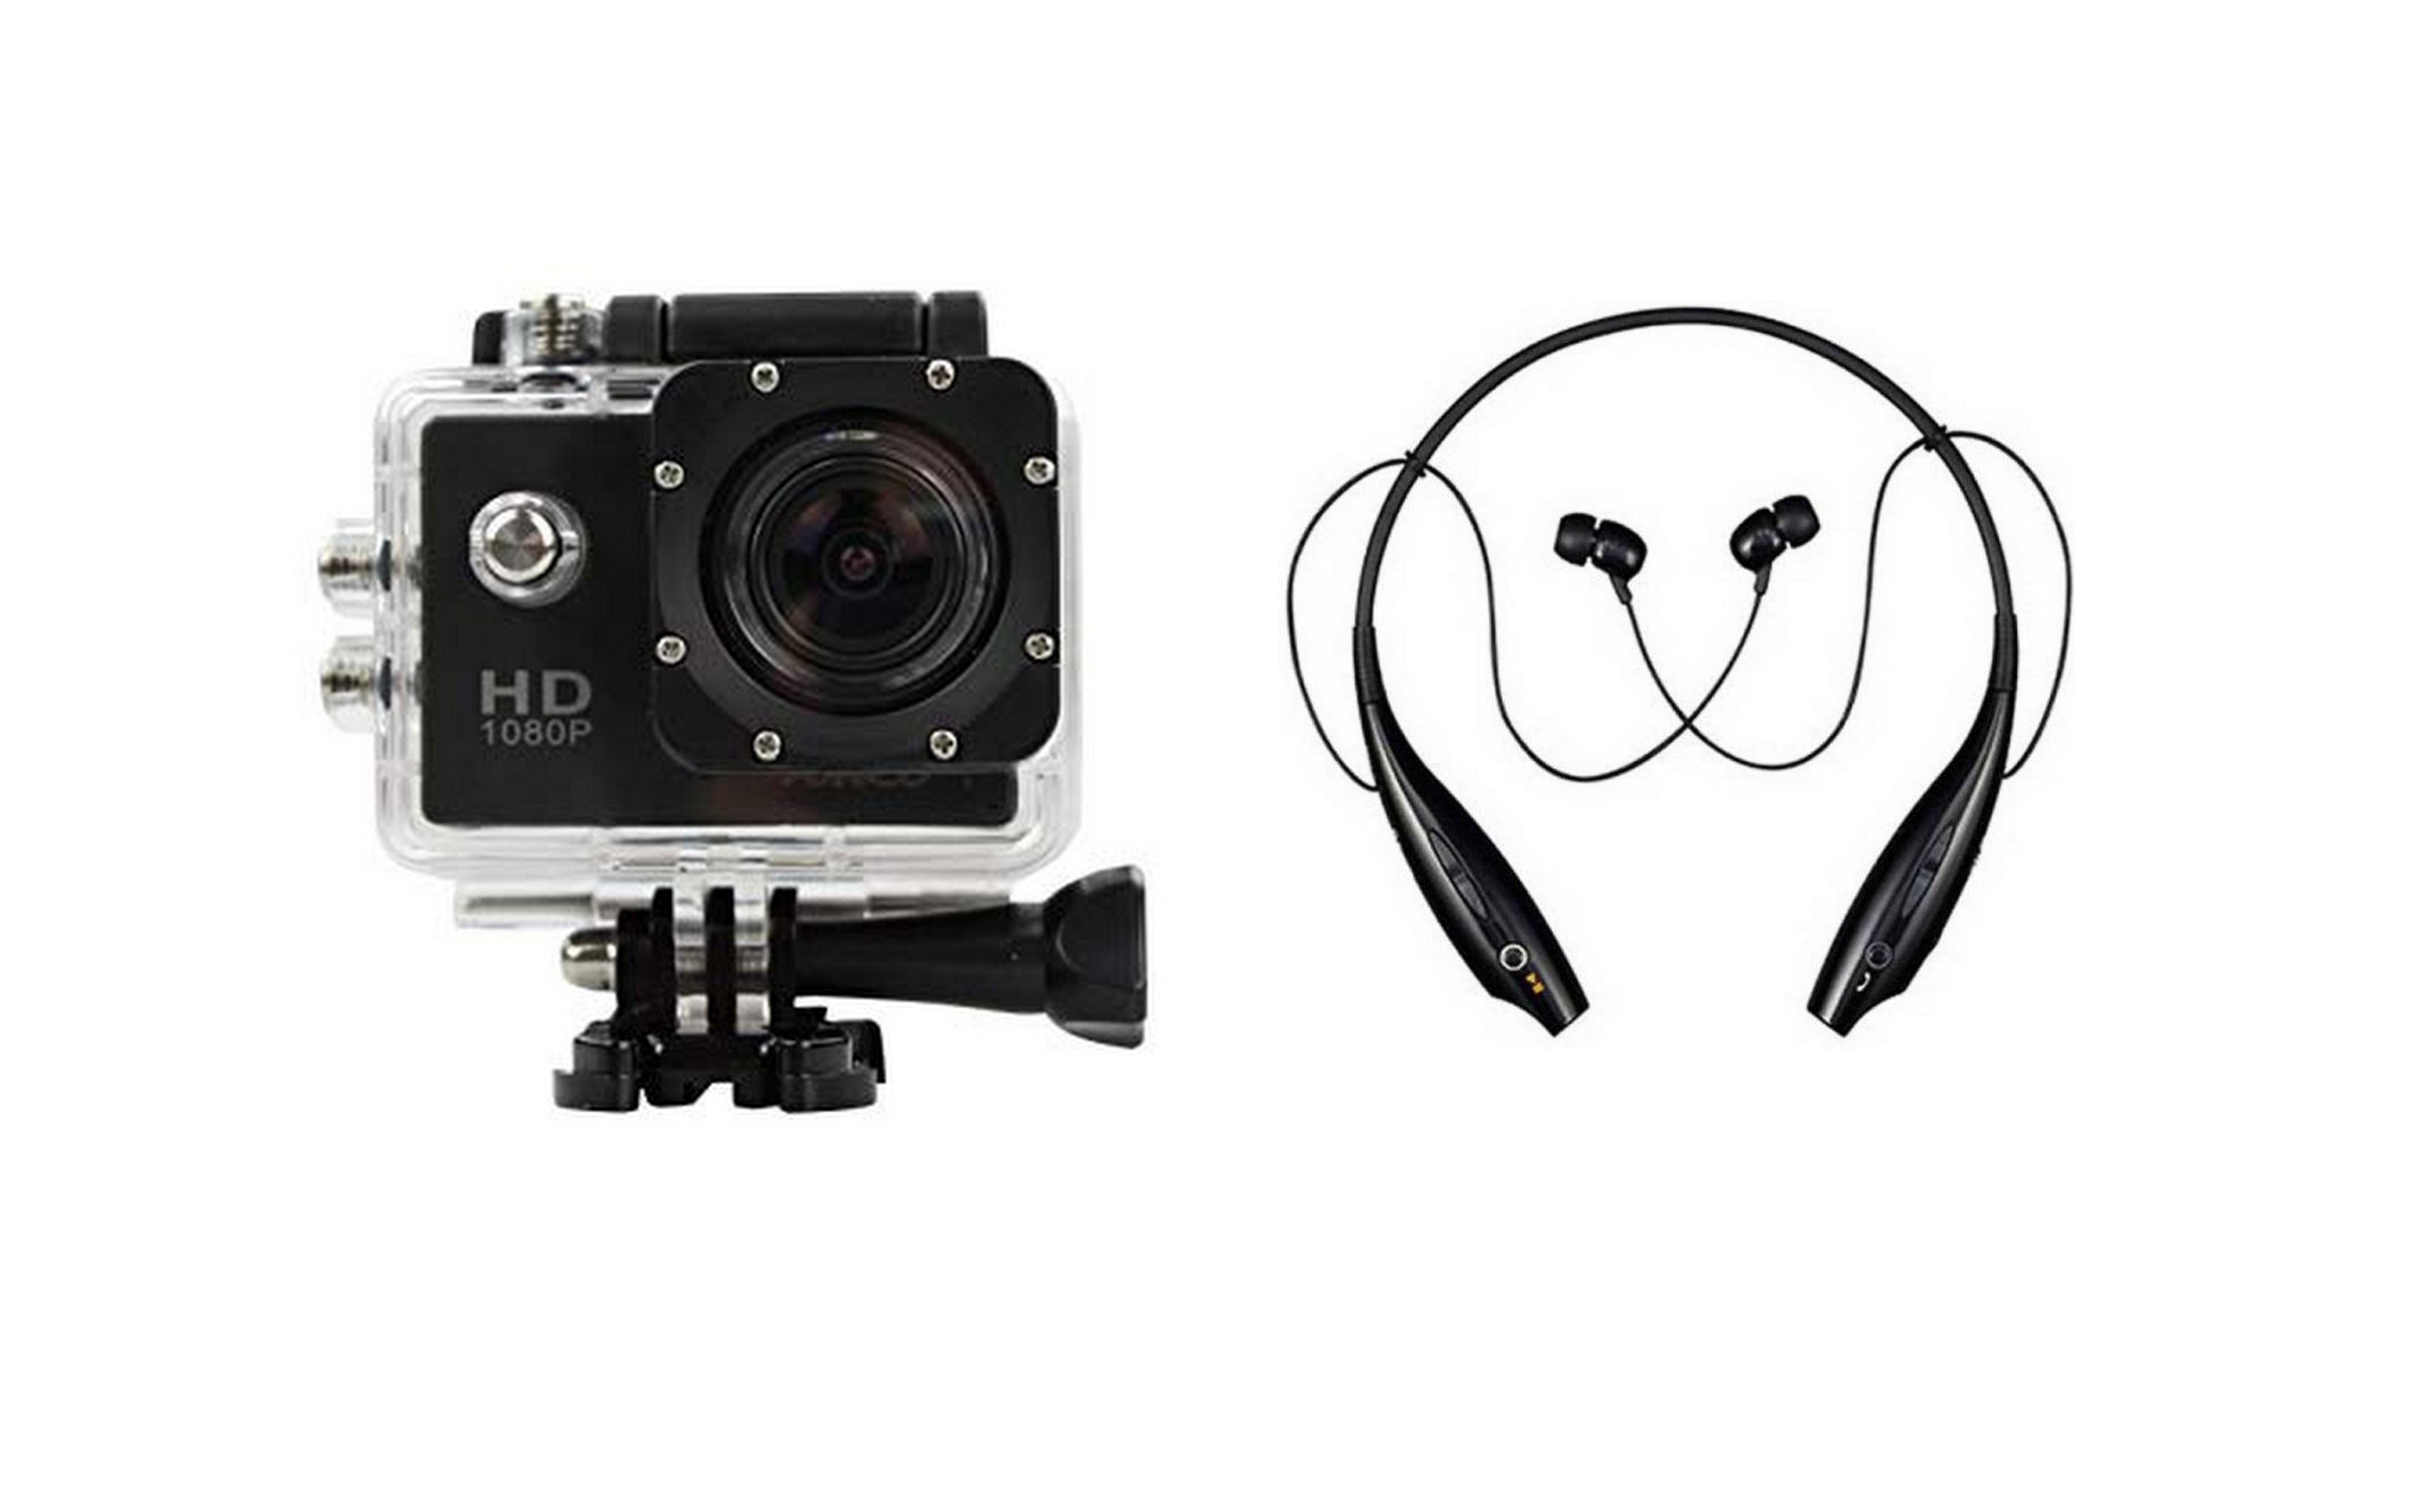 Bushwick Action HD 1080p 12MP Waterproof Sports Camera With Music Talking HBS 730 Bluetooth Headphones.